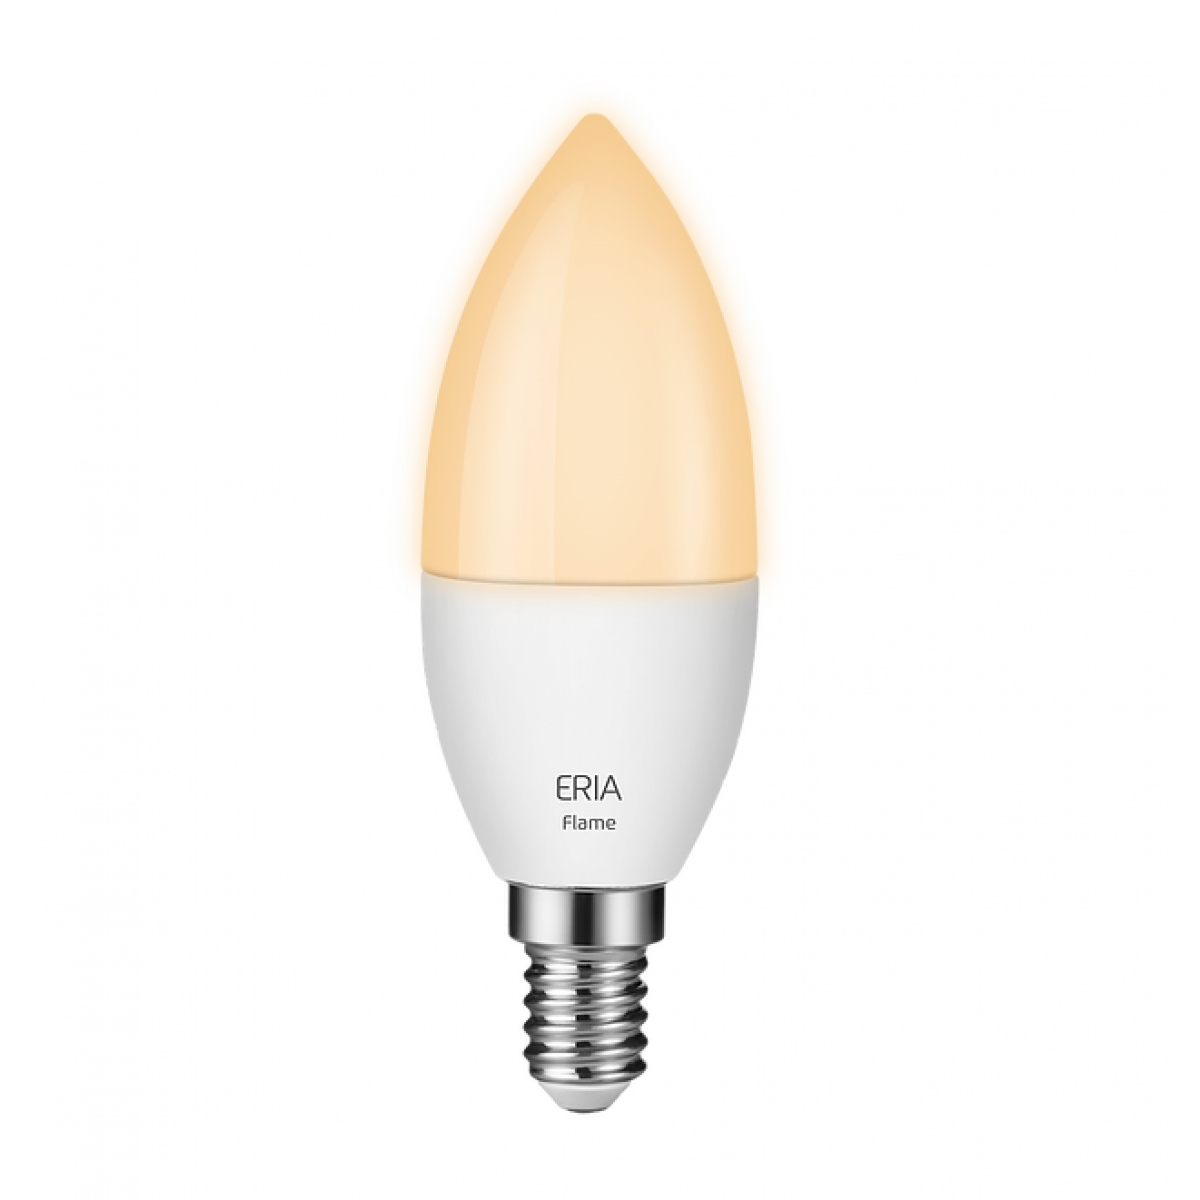 2020 - Eclairage intelligent (Chandelle) flamme - Ampoules LED